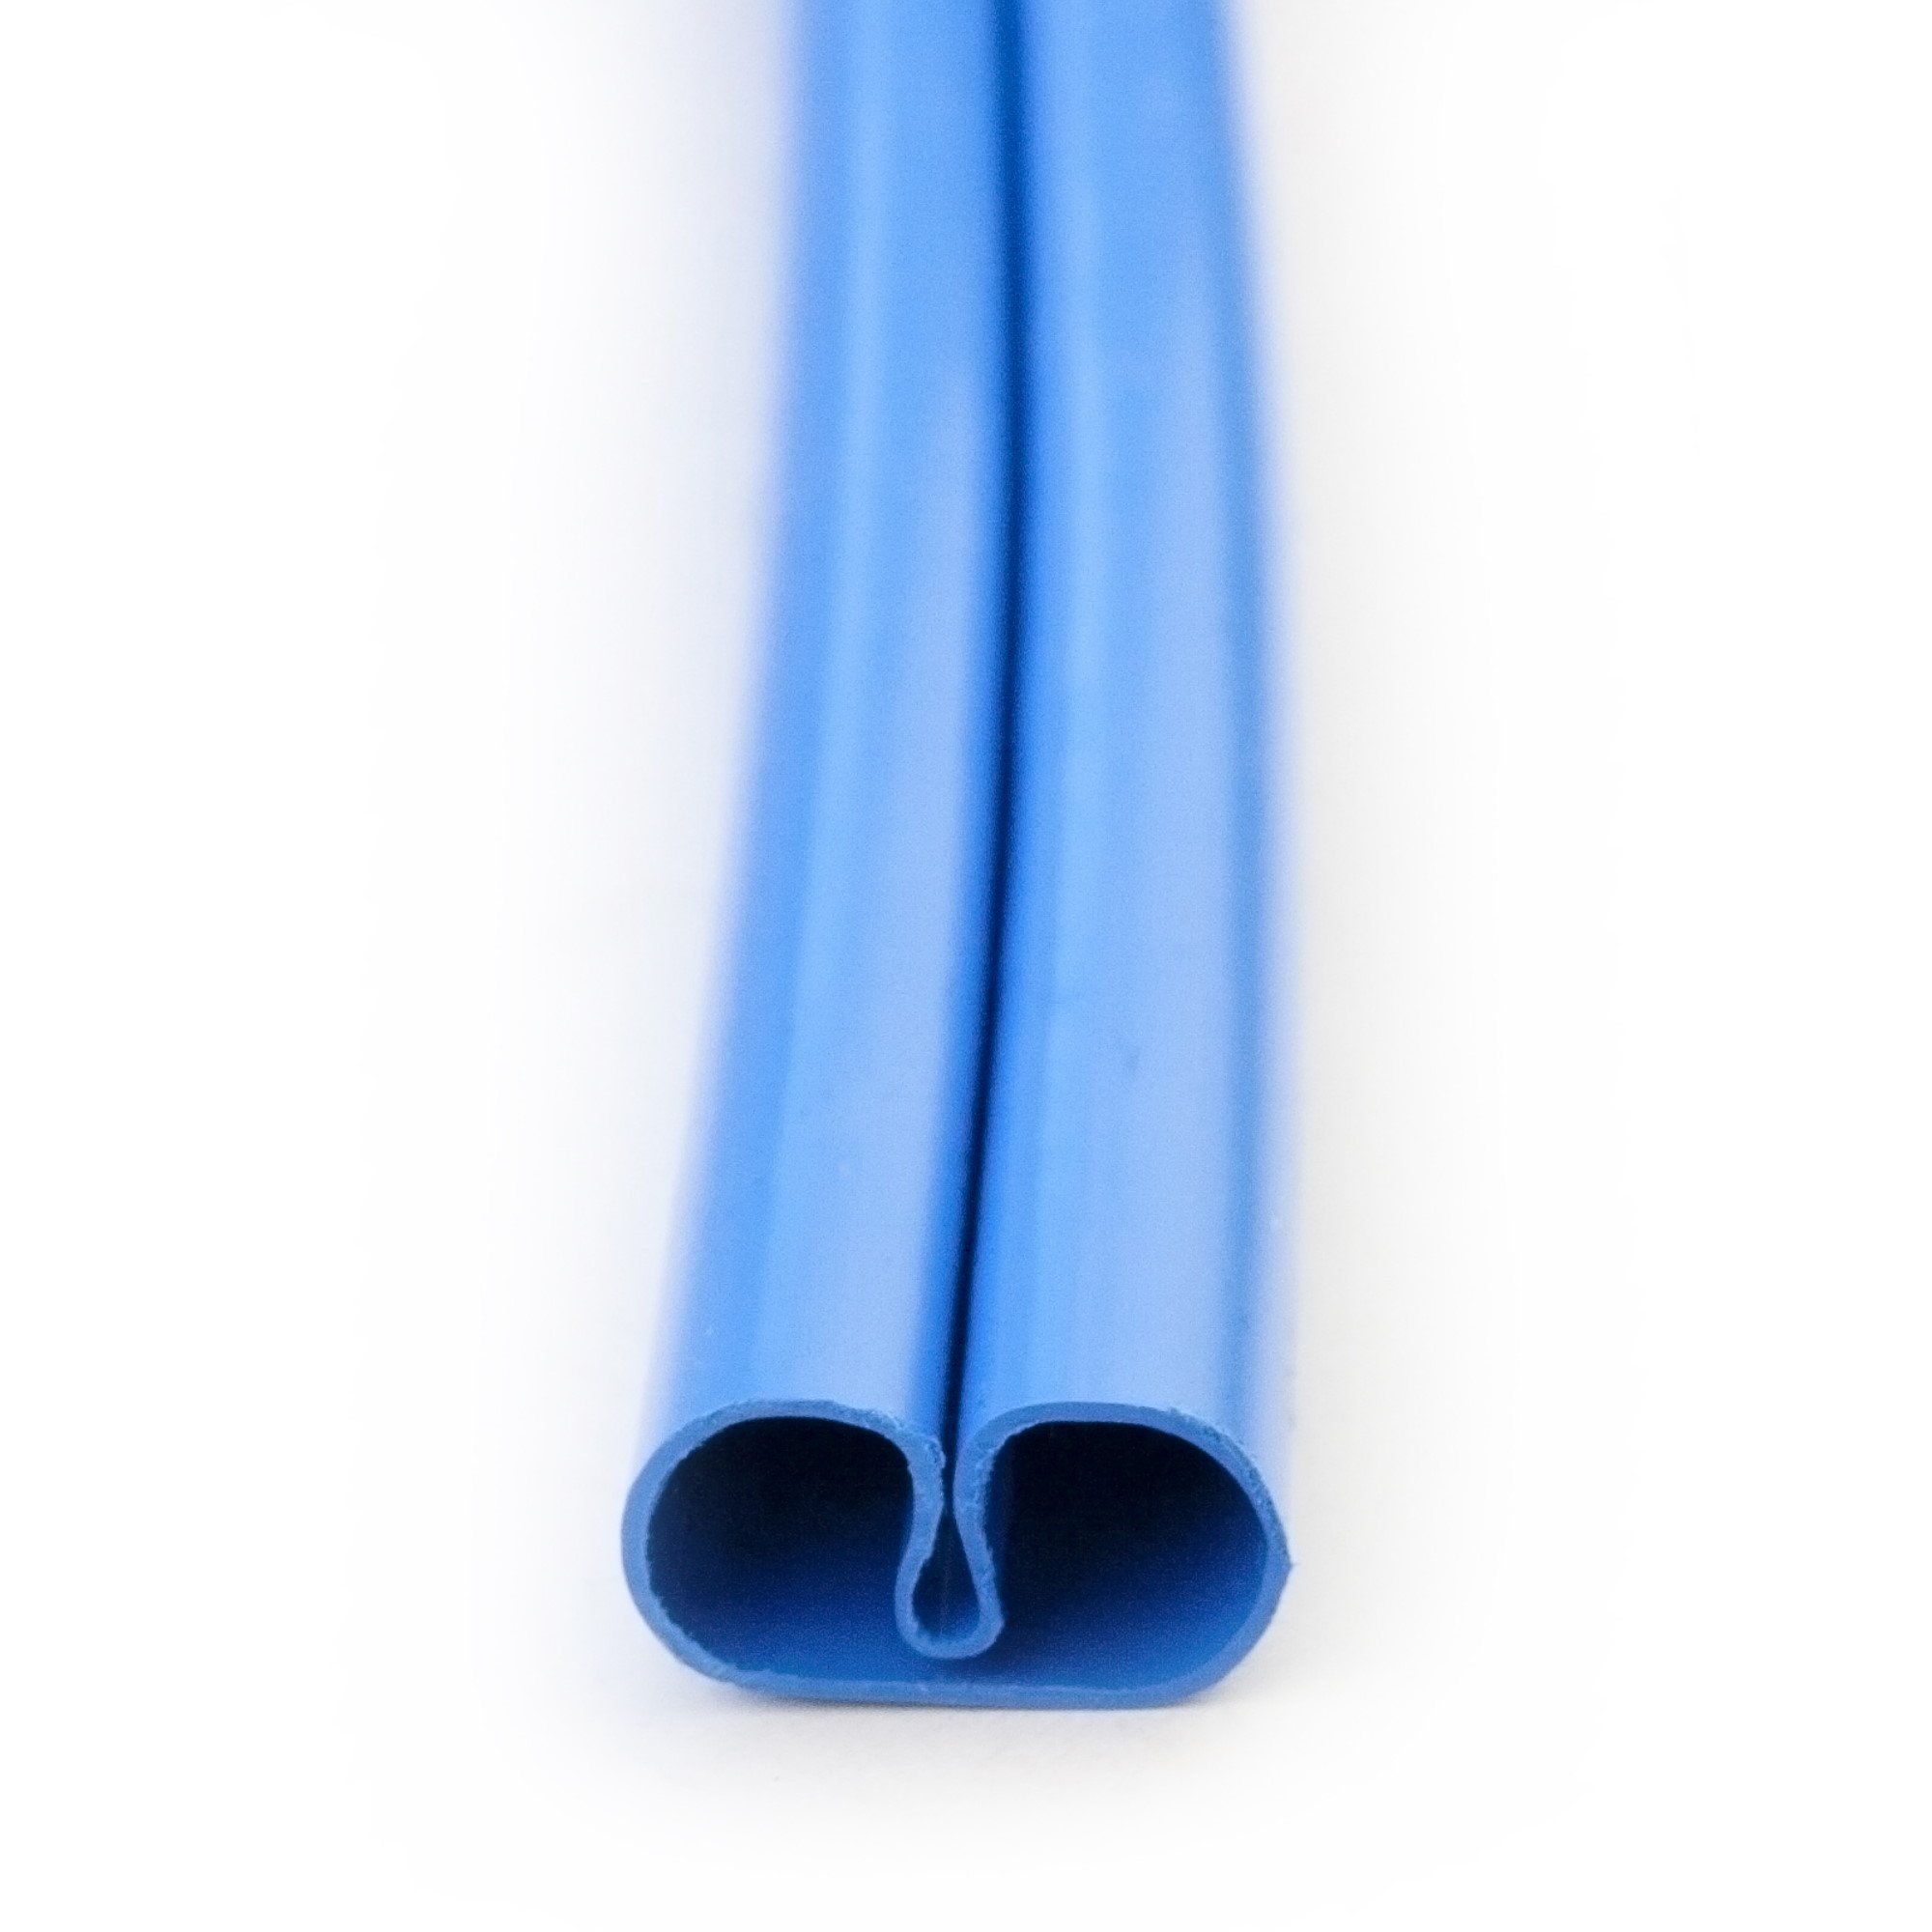 Stahlwandpool Set (5-teilig) rund 450x120 cm, Stahl 0,4 mm anthrazit, Folie 0,3 mm blau, Overlap